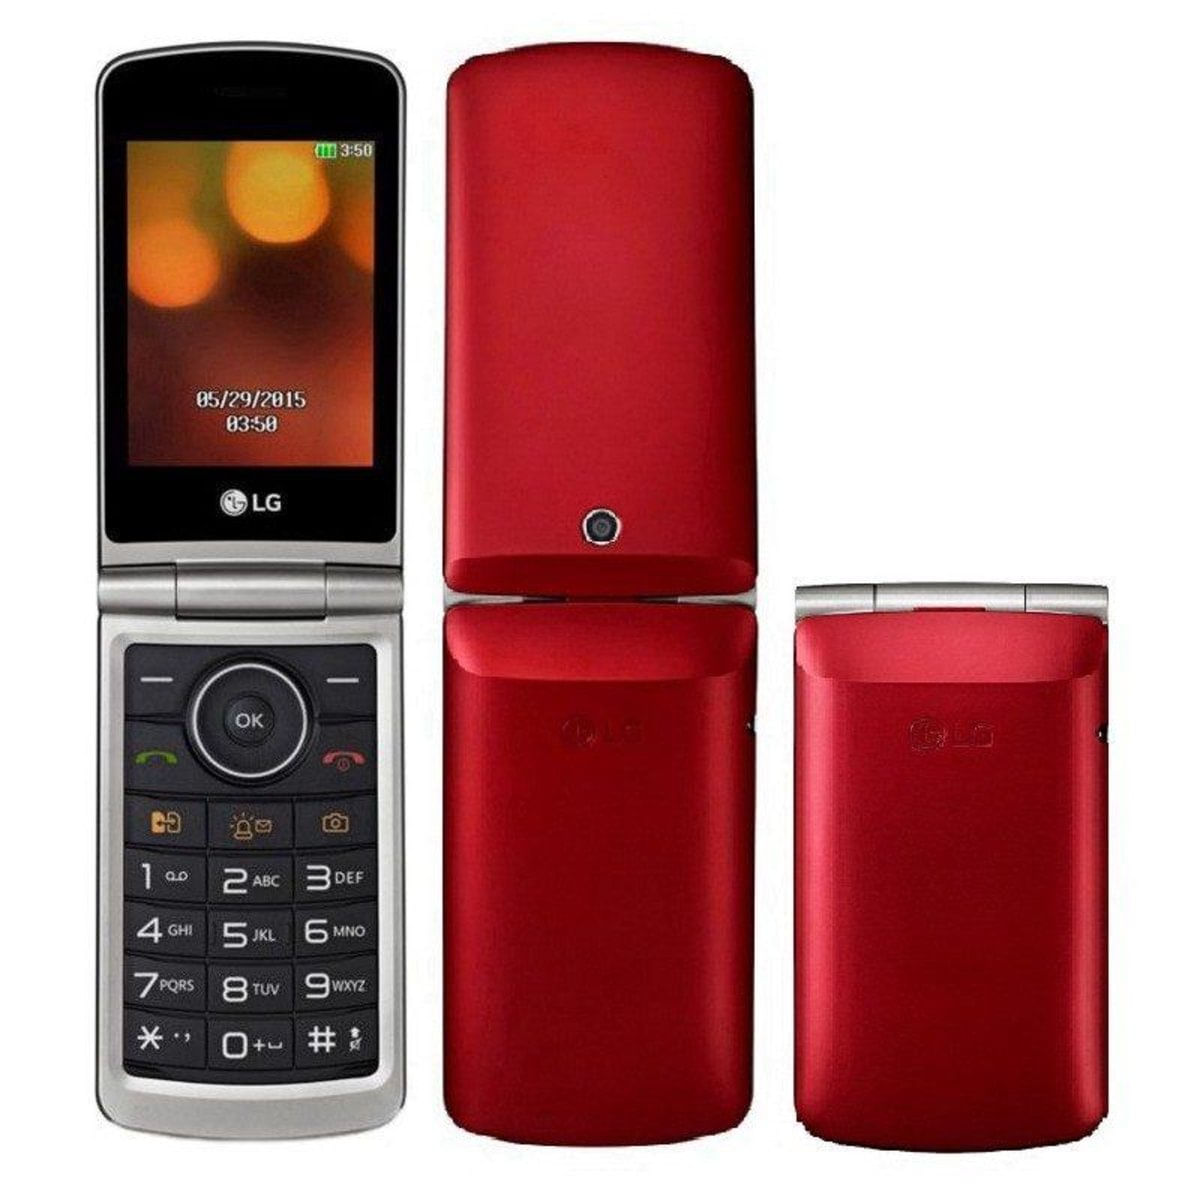 MP03581127_Celular-LG-G360-flip---vermelho_1_Zoom